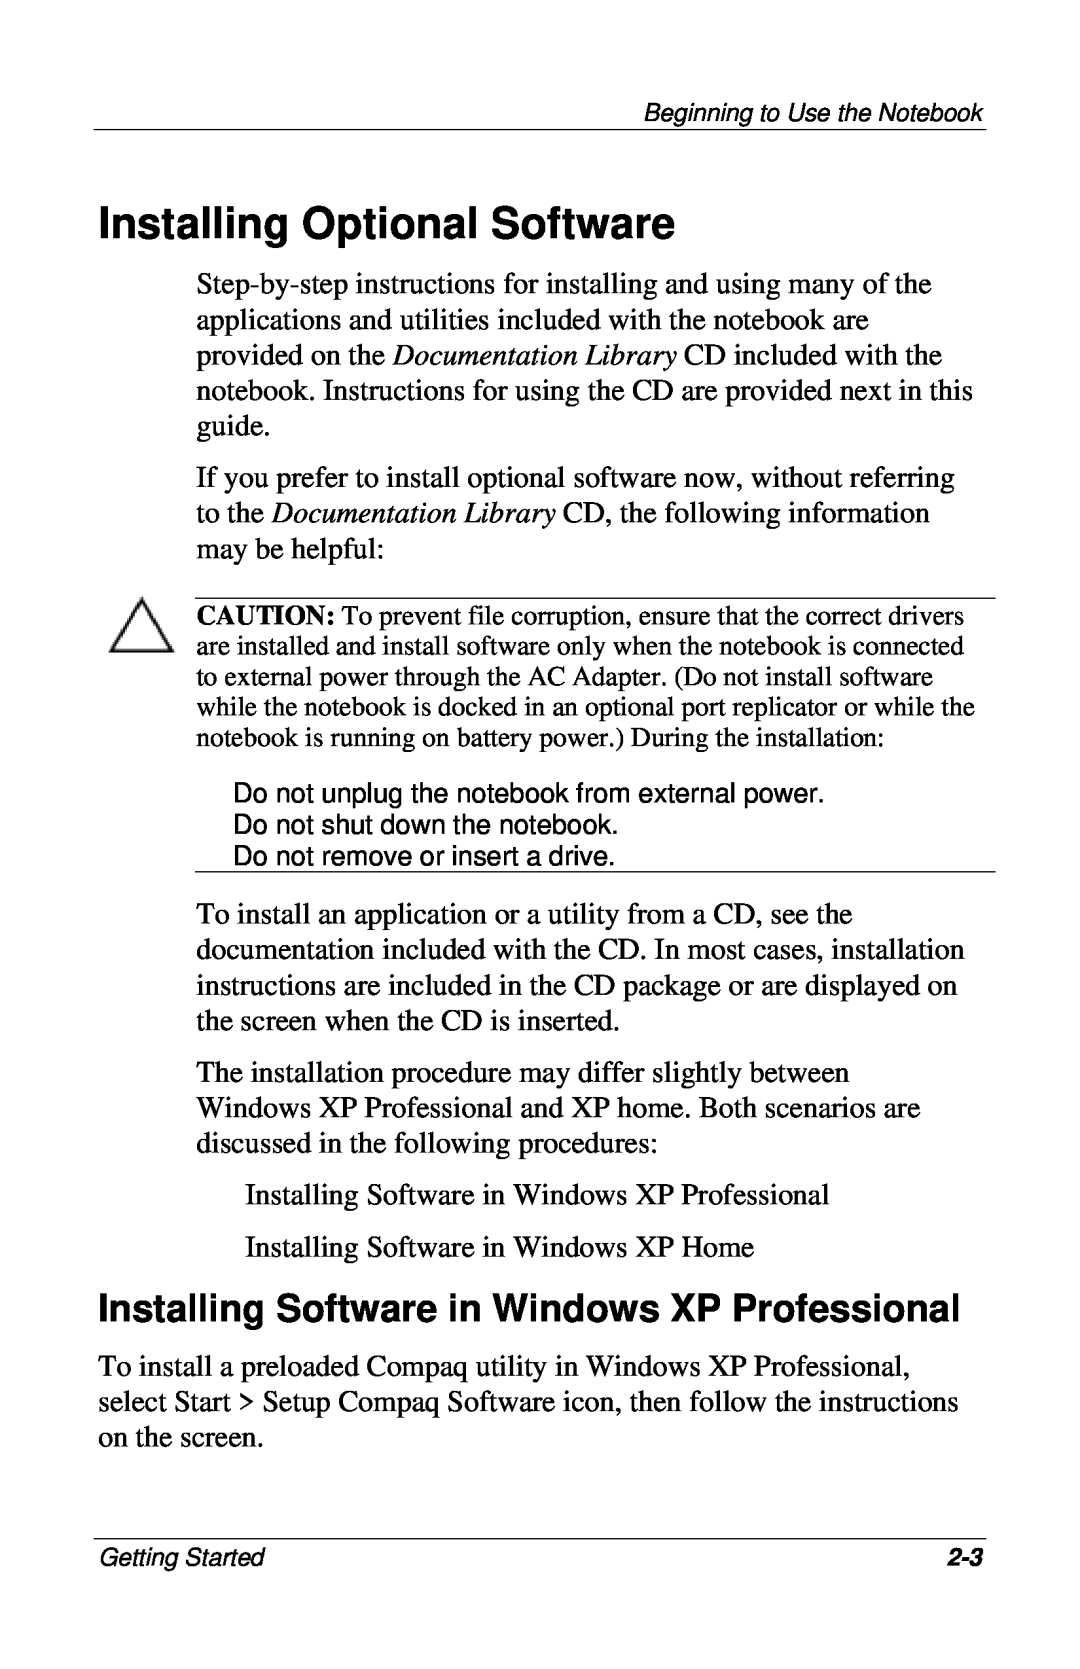 HP 905AU, 955AP, 950AP, 943AP, 945AP, 940AP, 935AP Installing Optional Software, Installing Software in Windows XP Professional 